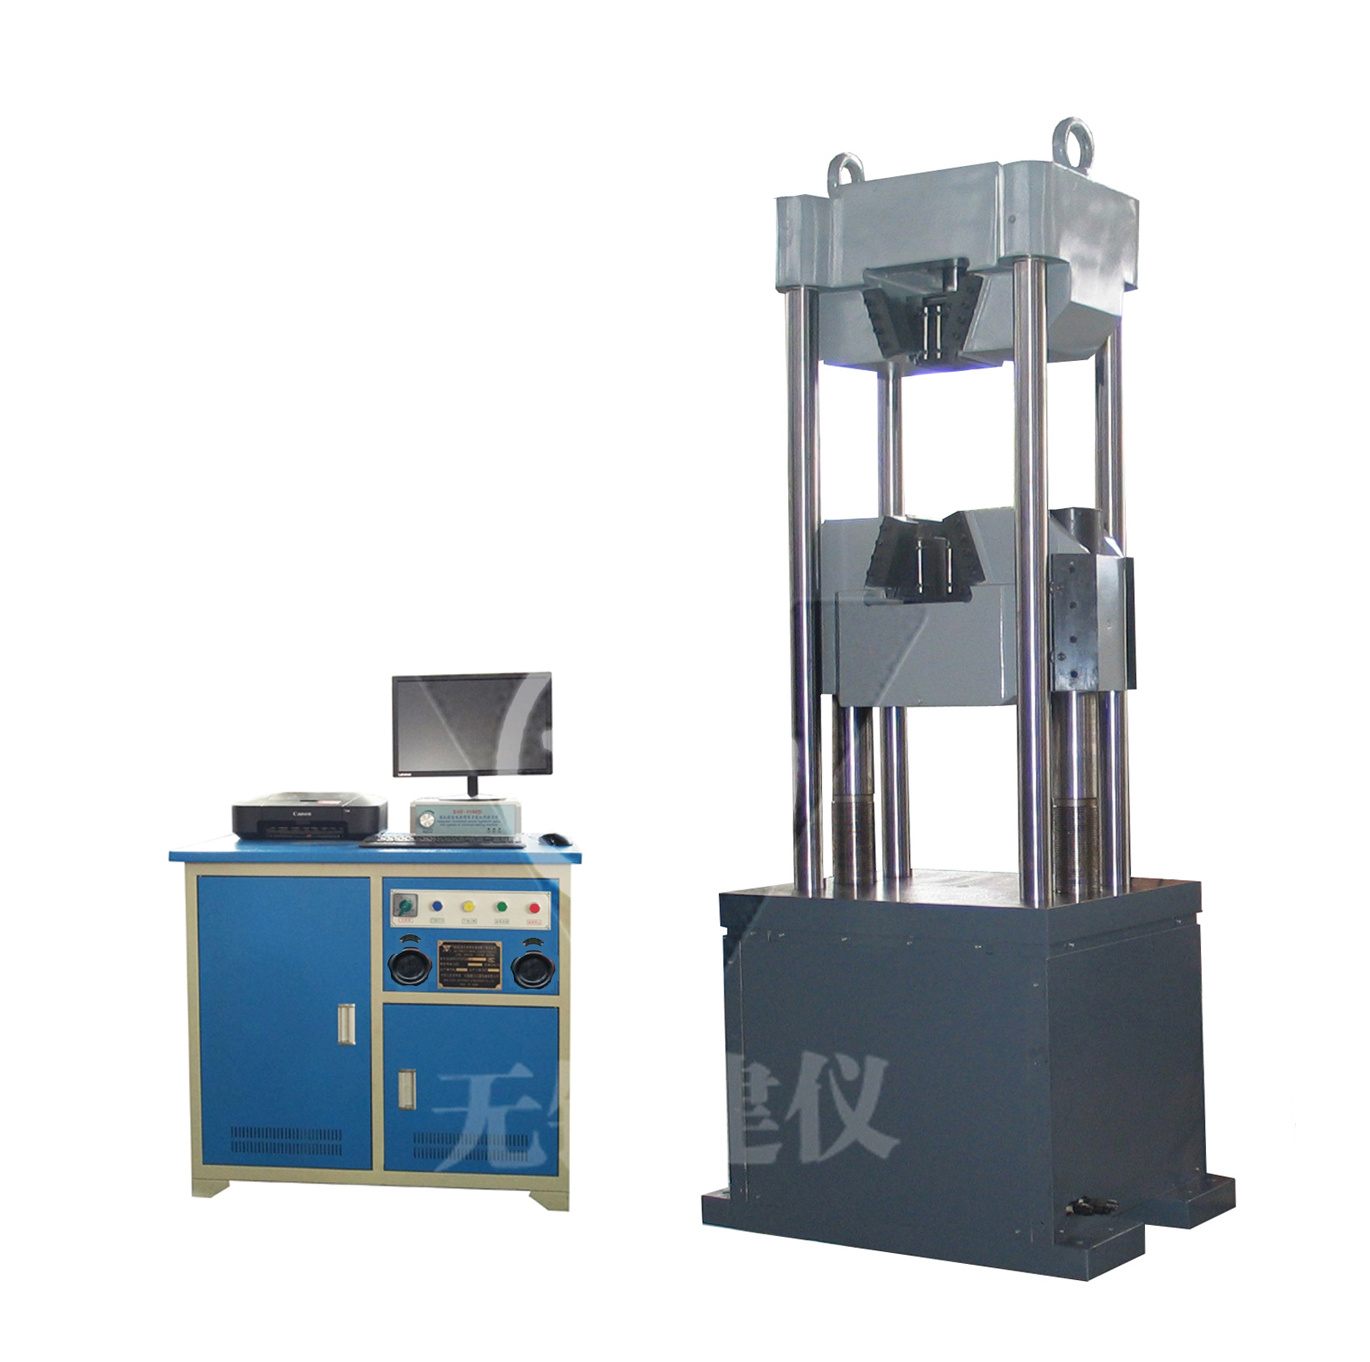 WEW-2000 universal testing machine (microcomputer controlled electro-hydraulic servo automatic loading standard configuration)